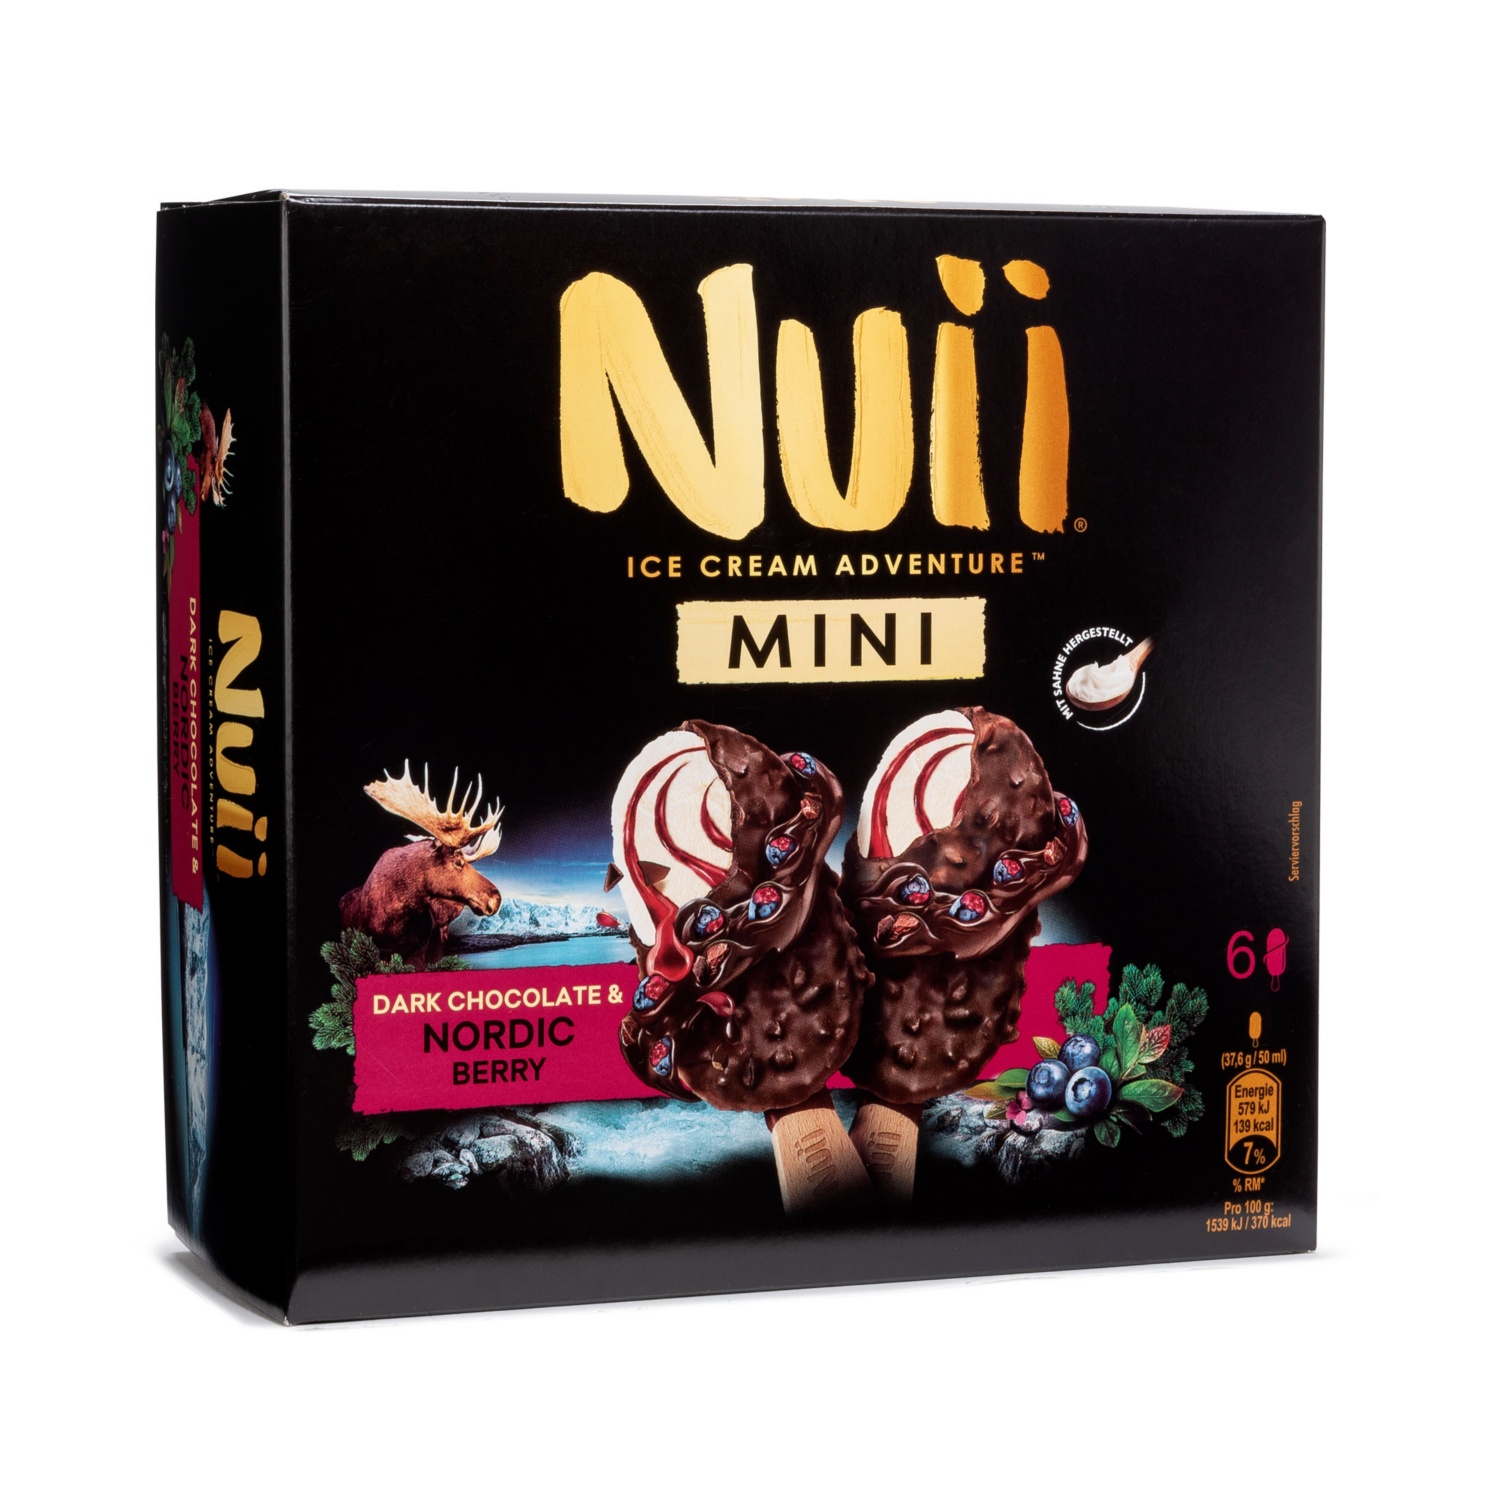 Nuii Mini, Dark Chocolate & Nordic Berries